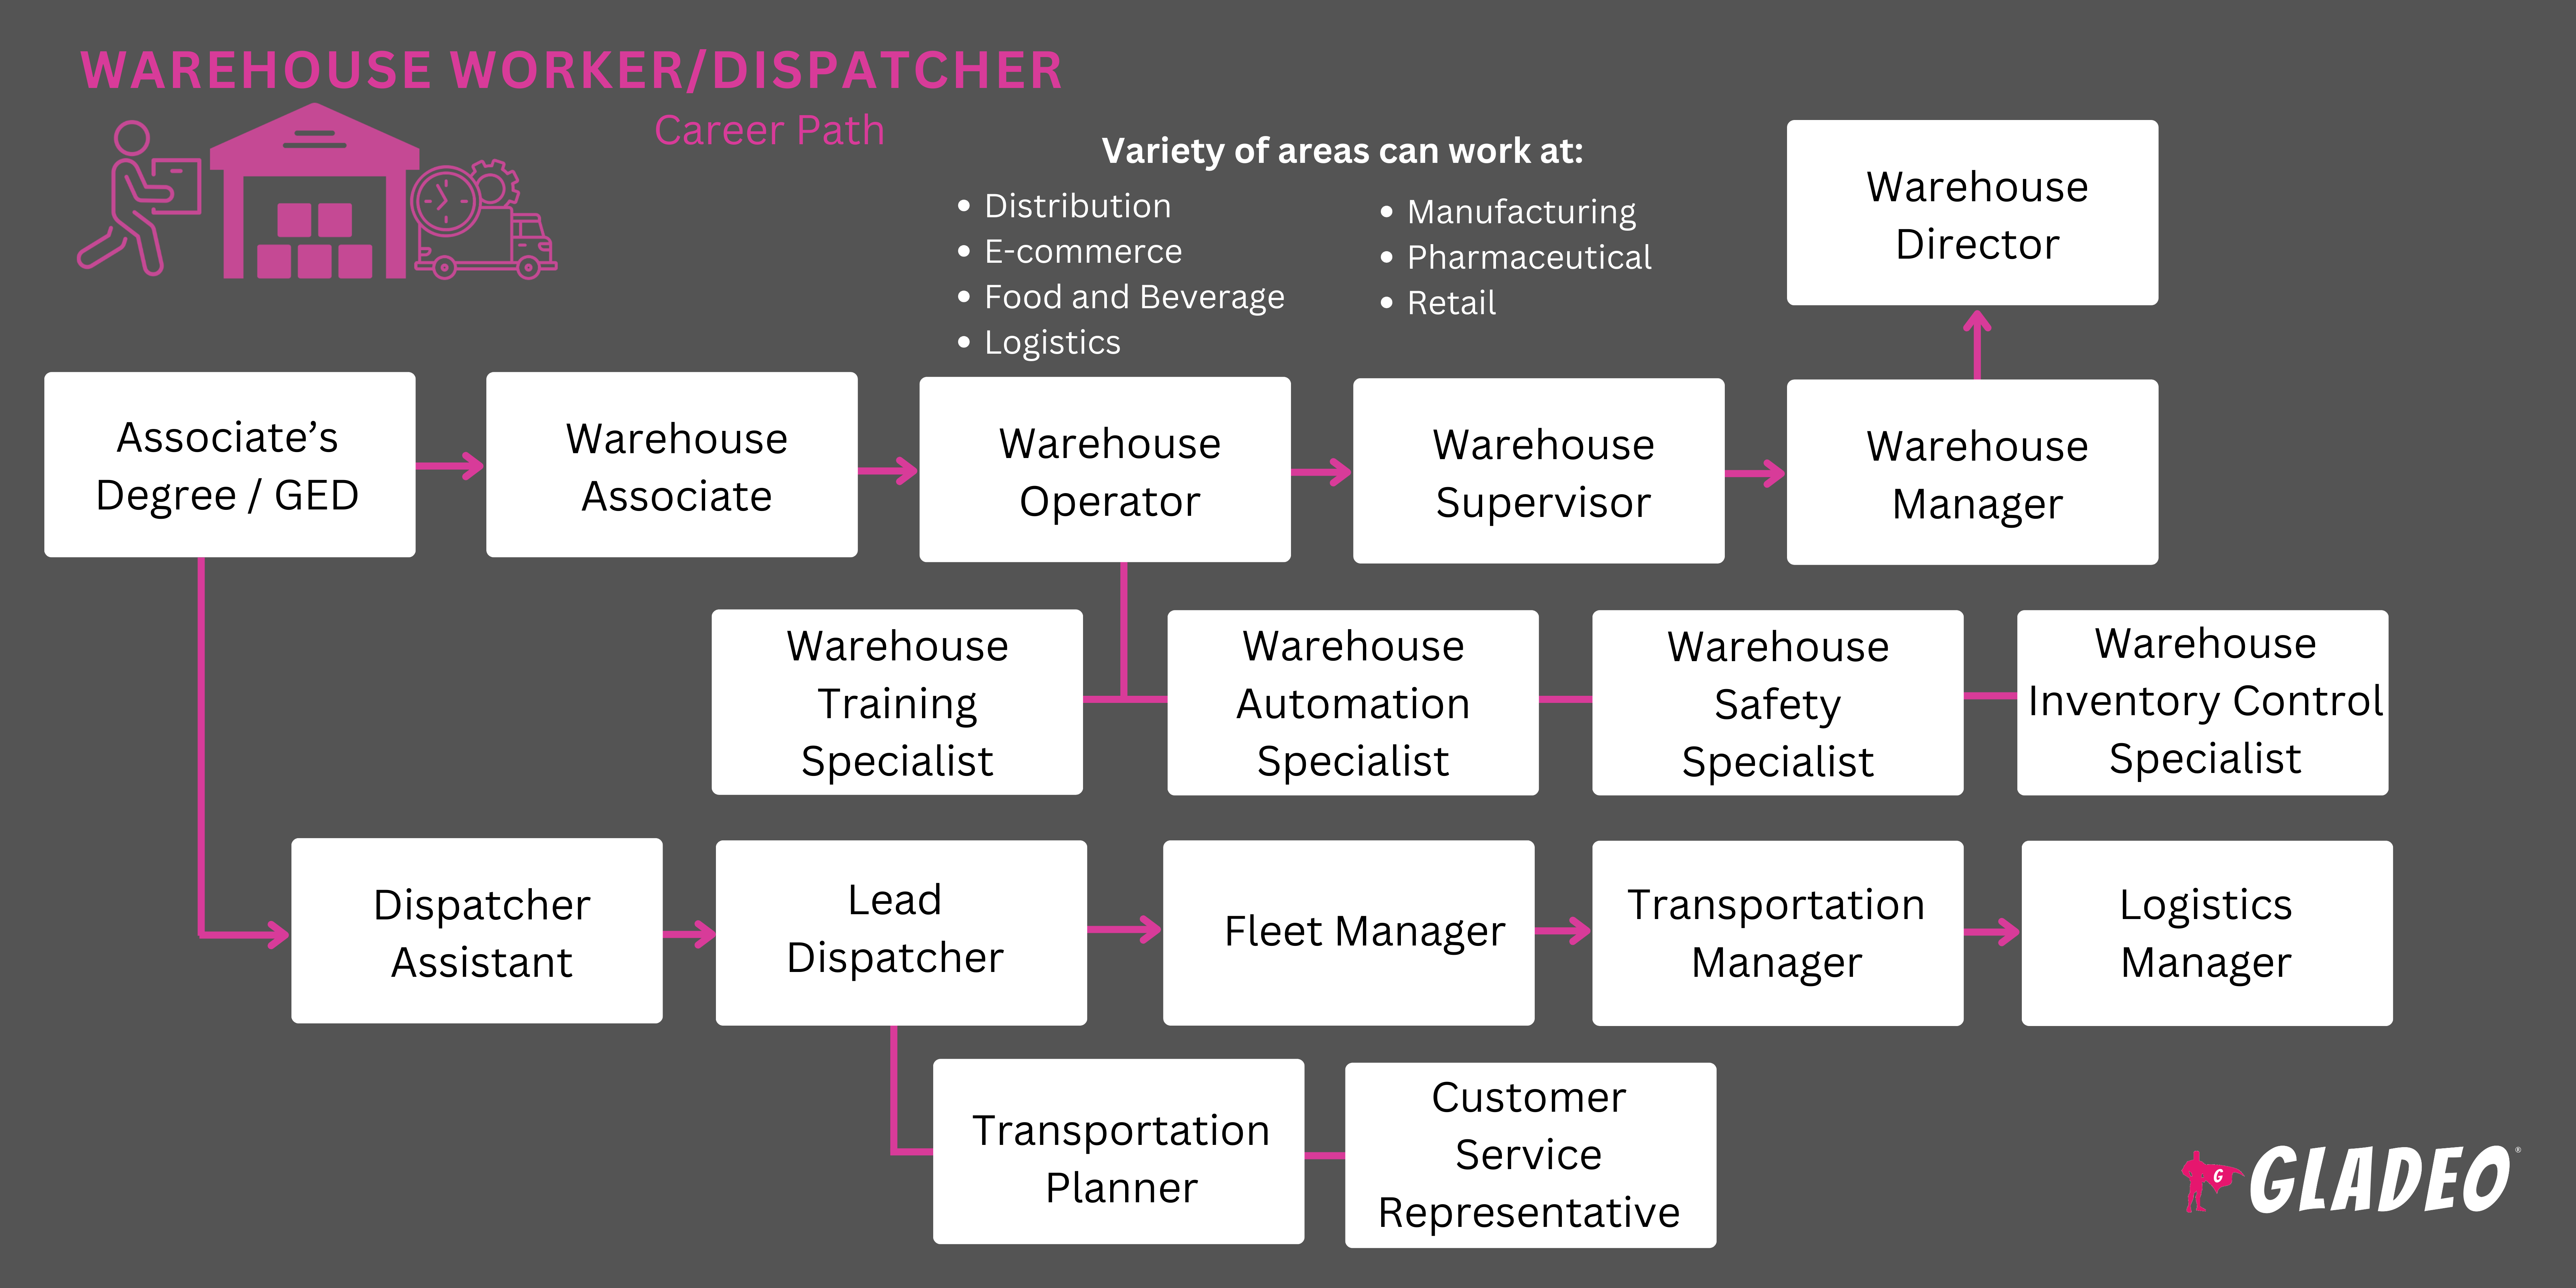 Warehouse Worker/Dispatcher Roadmap